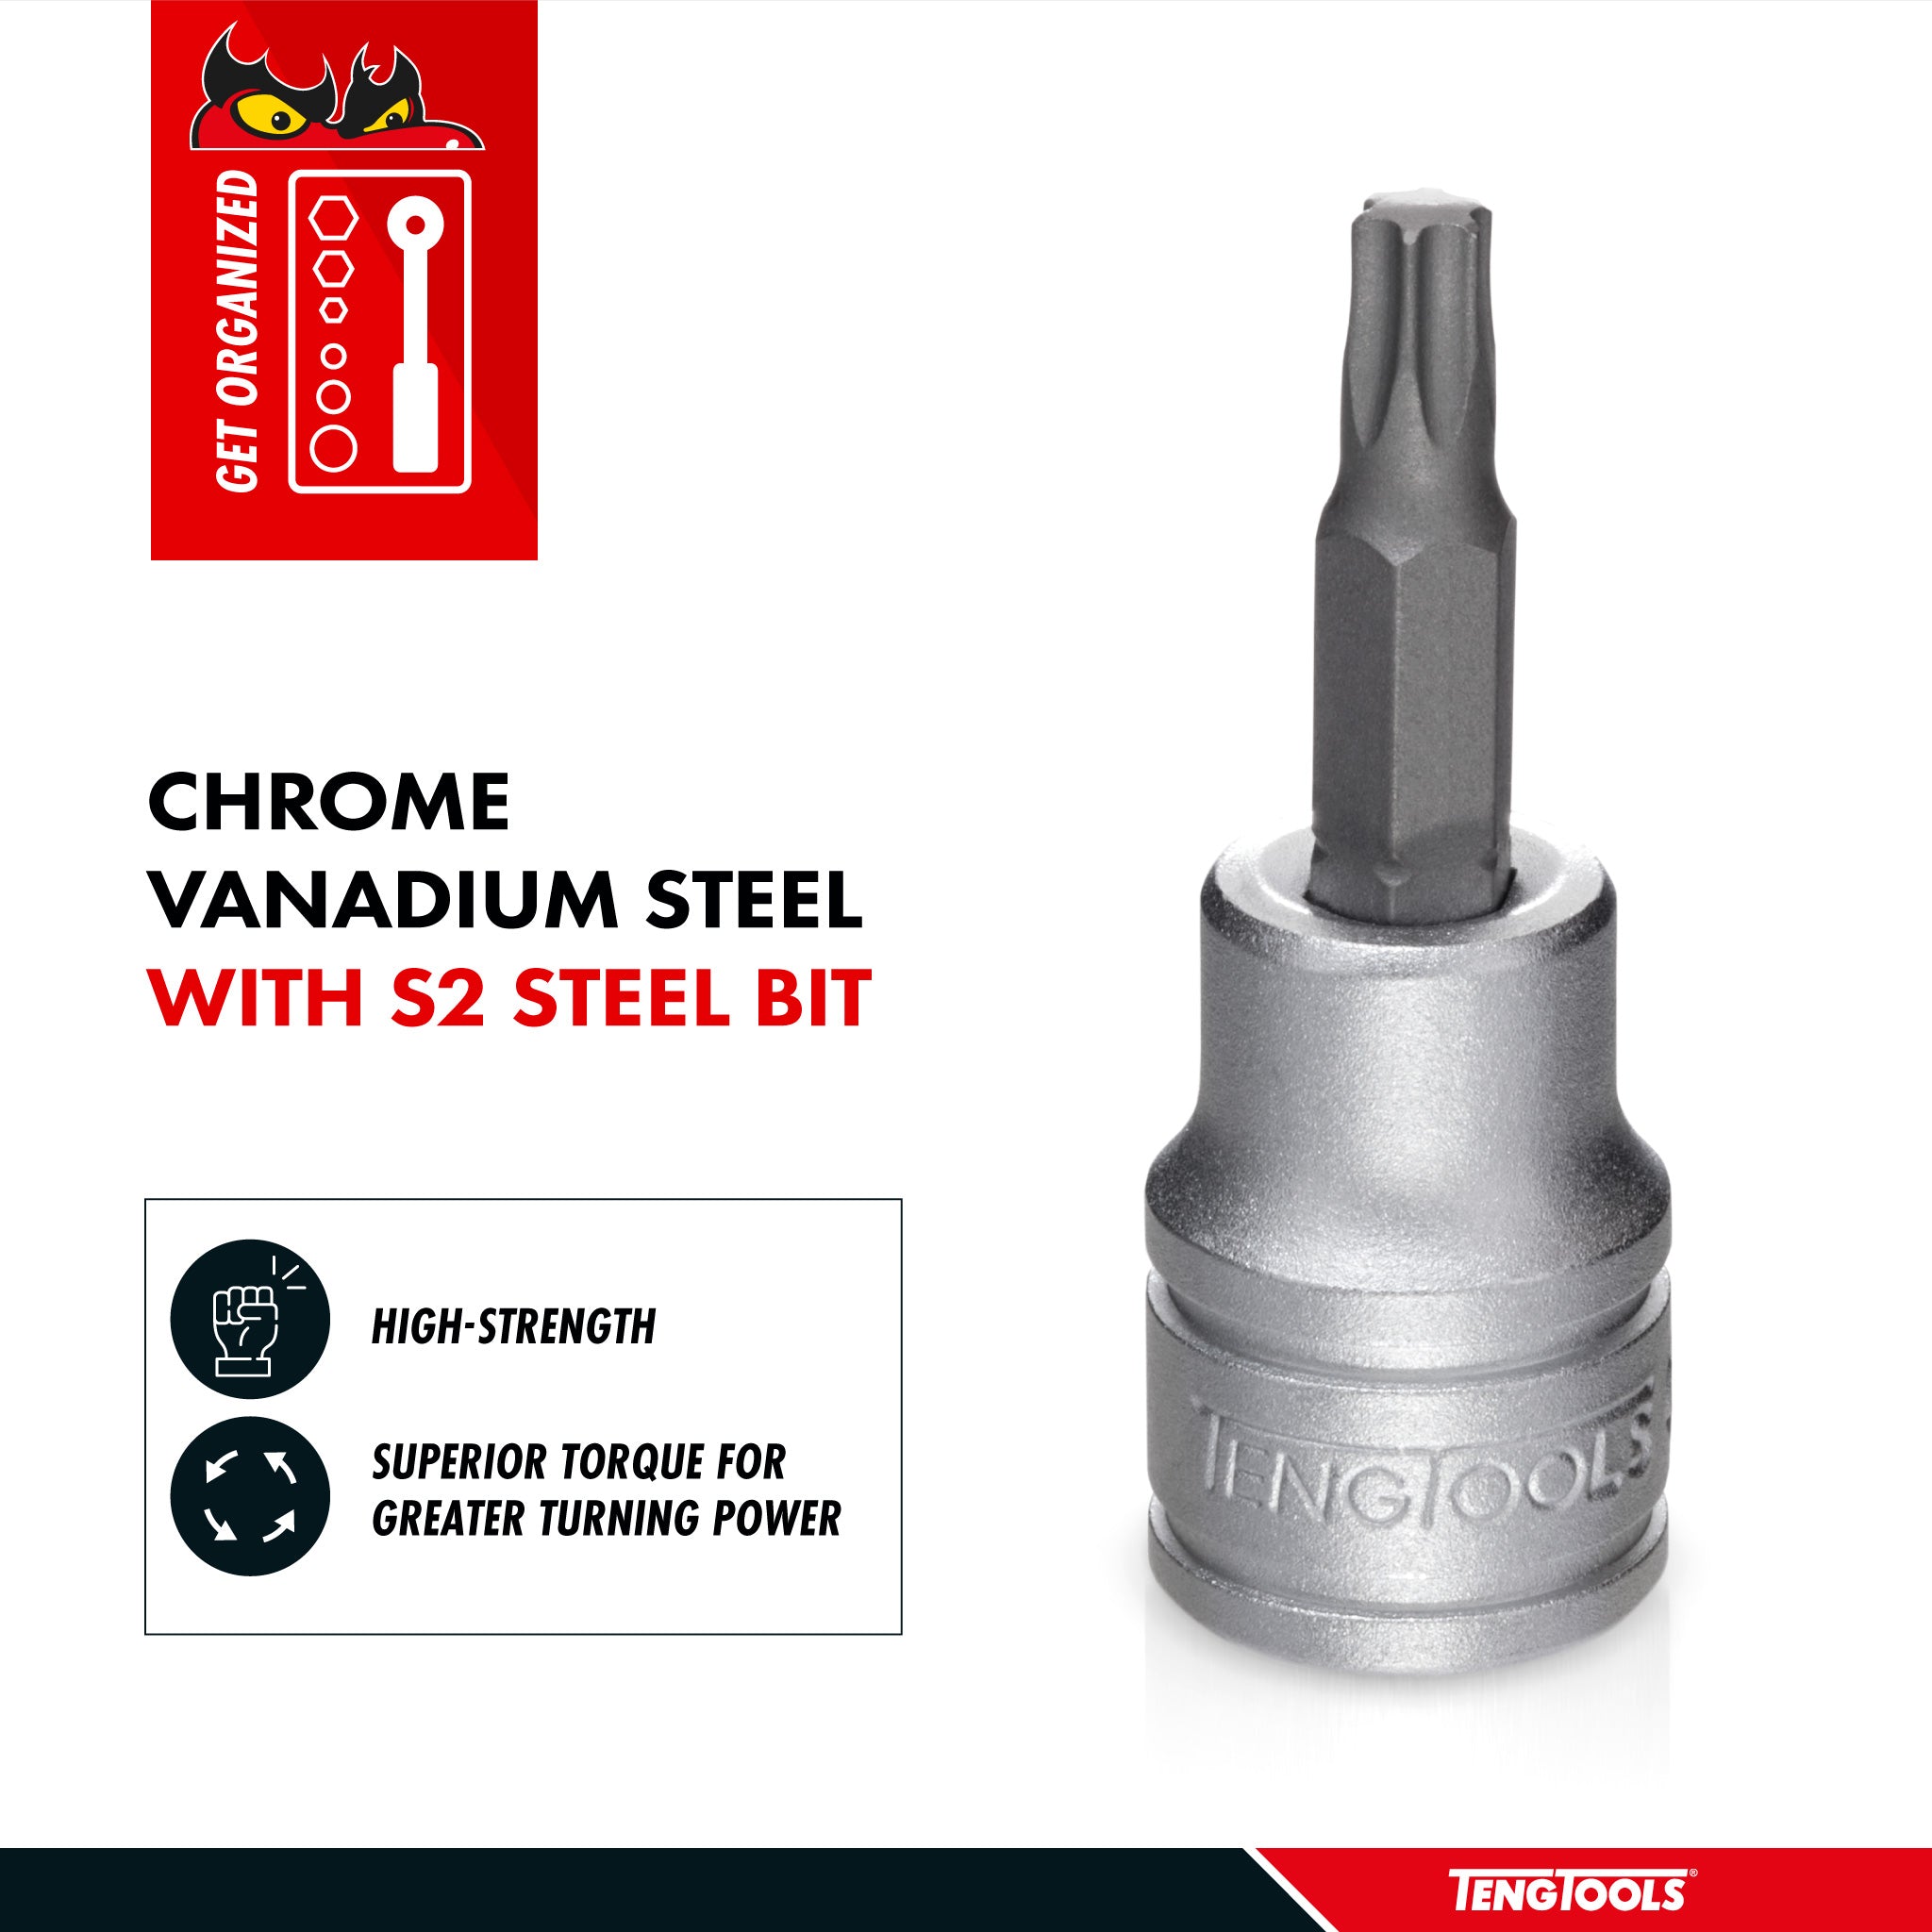 Teng Tools 3/8 Inch Drive Metric Torx TX Chrome Vanadium Sockets - TX10